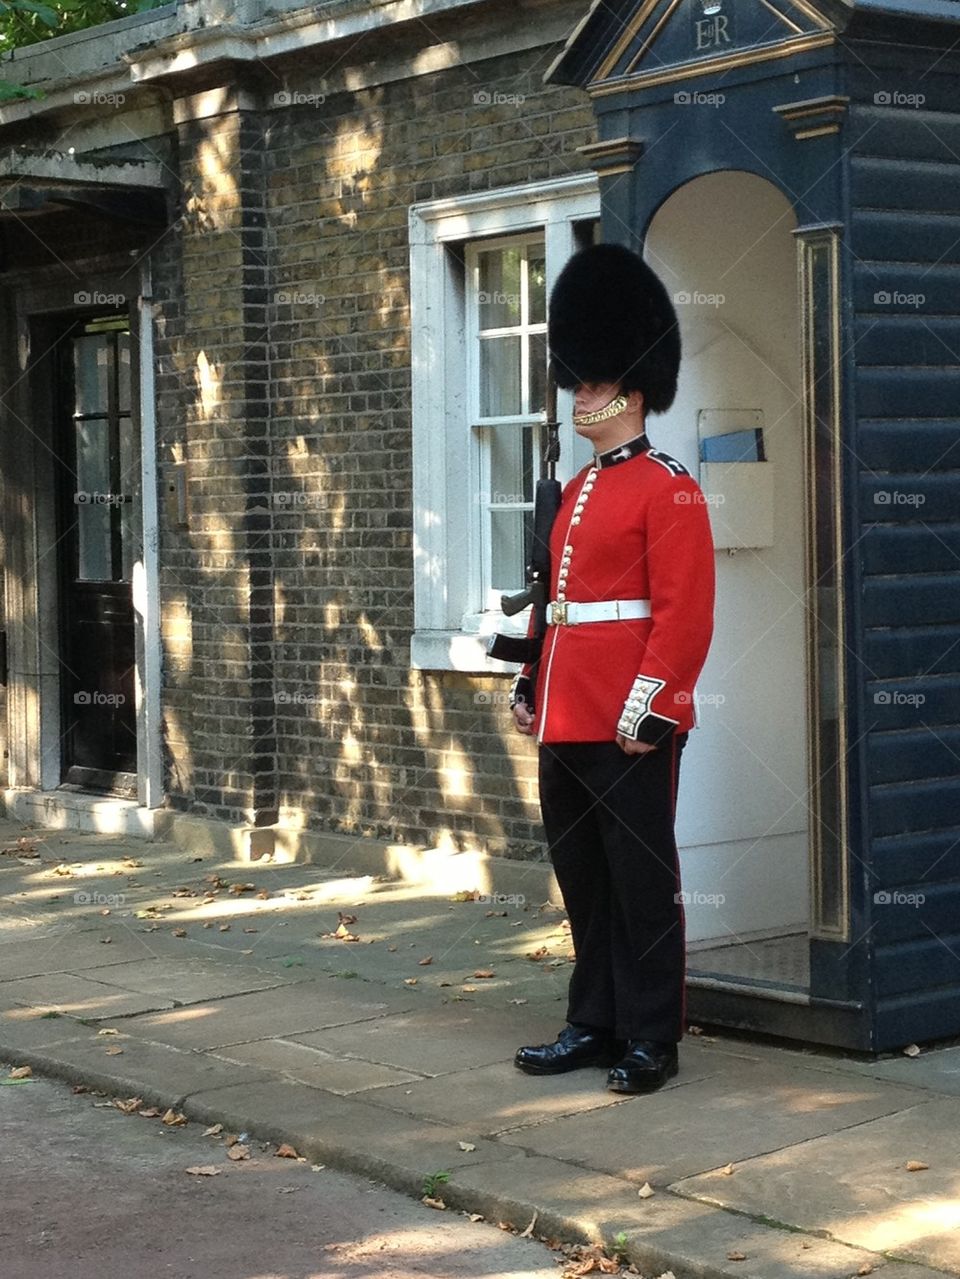 London guard